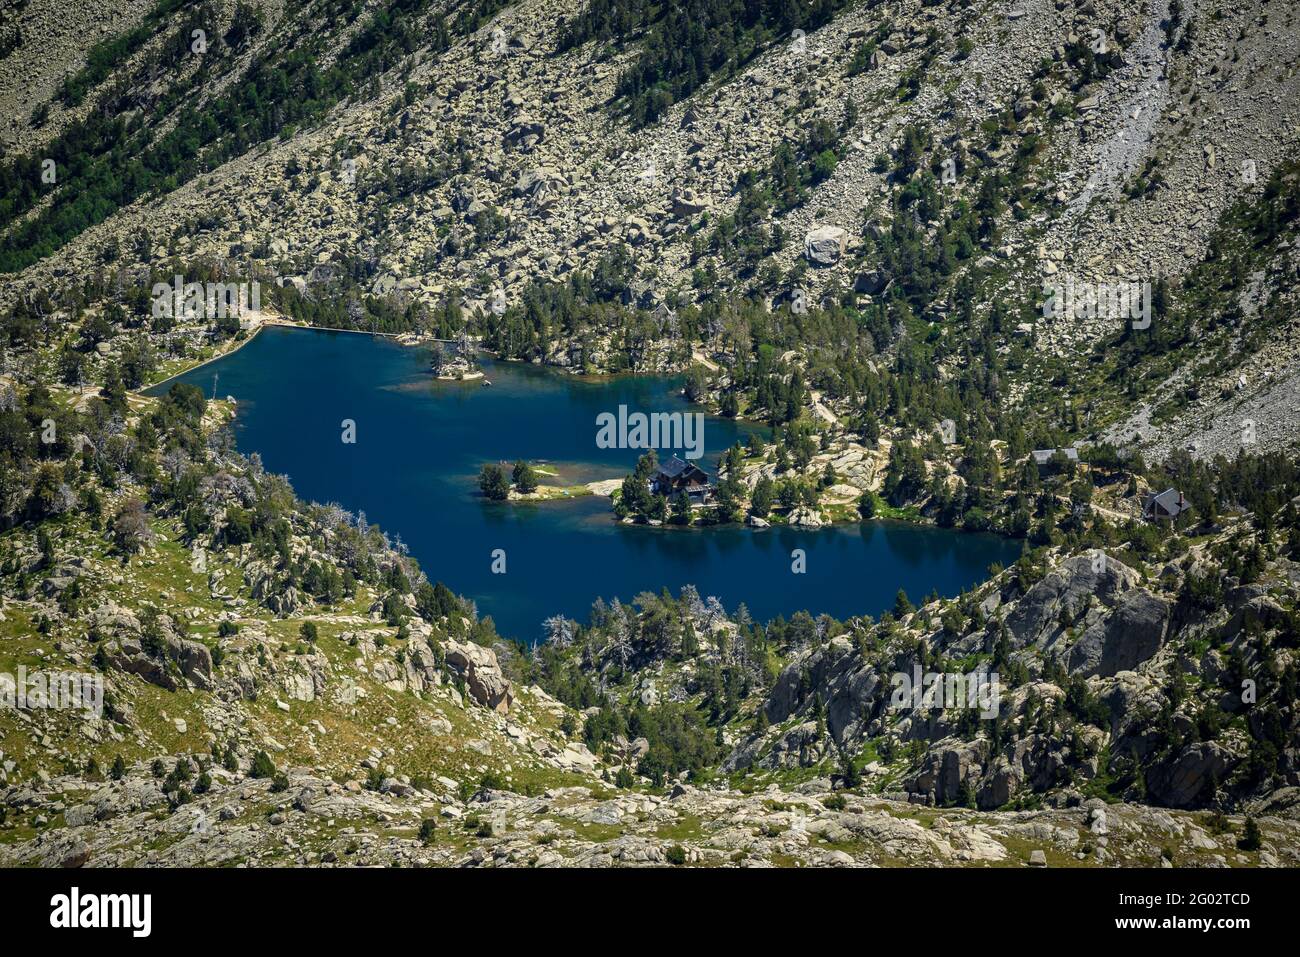 Views from the Pic de Peguera summit (Aigüestortes i Estany de Sant Maurici National Park, Catalonia, Spain, Pyrenees) Stock Photo